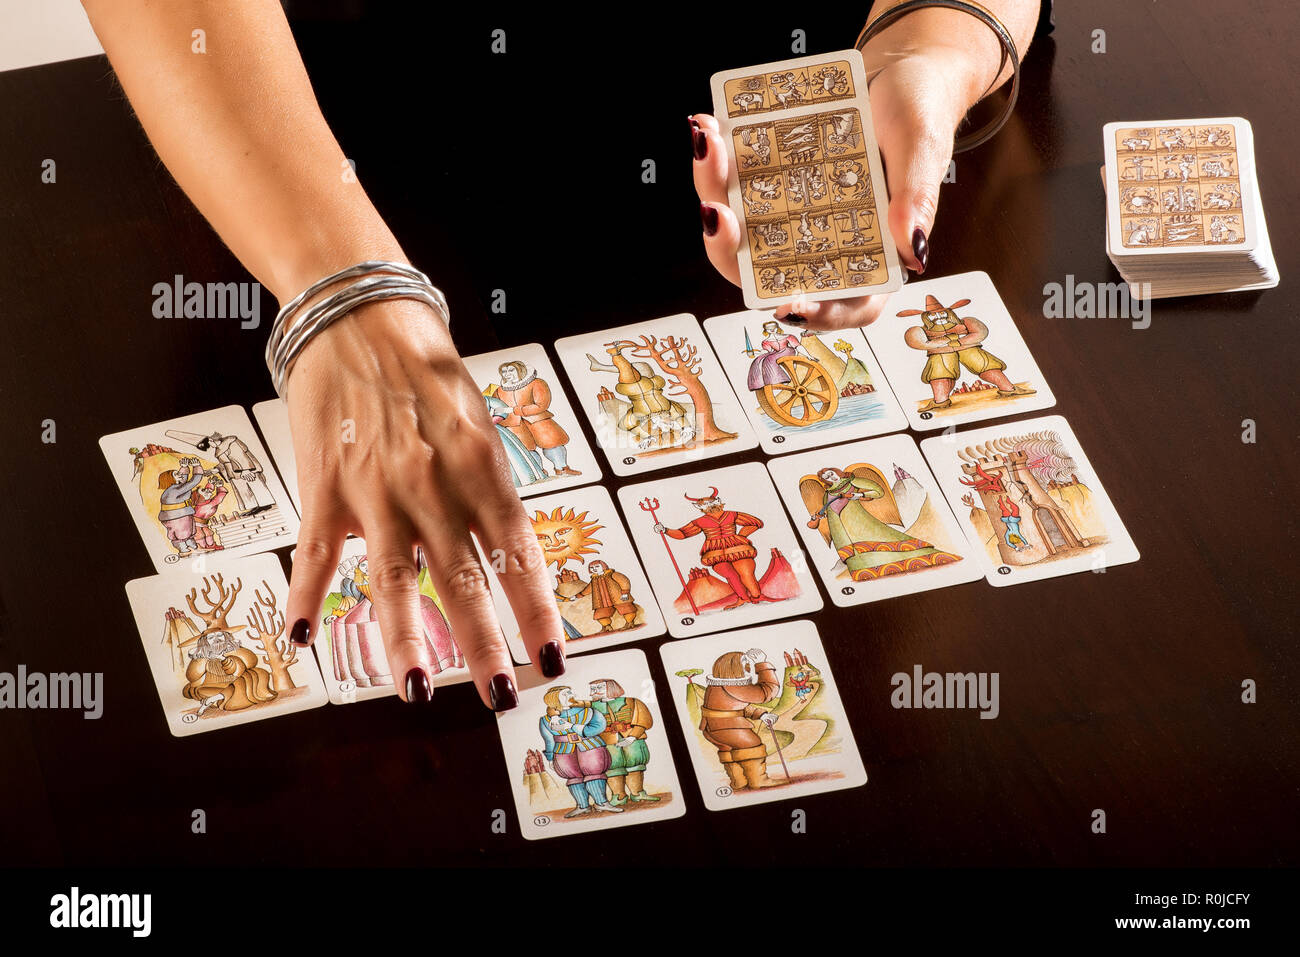 Fortune teller cards fotografías e imágenes de alta resolución - Alamy